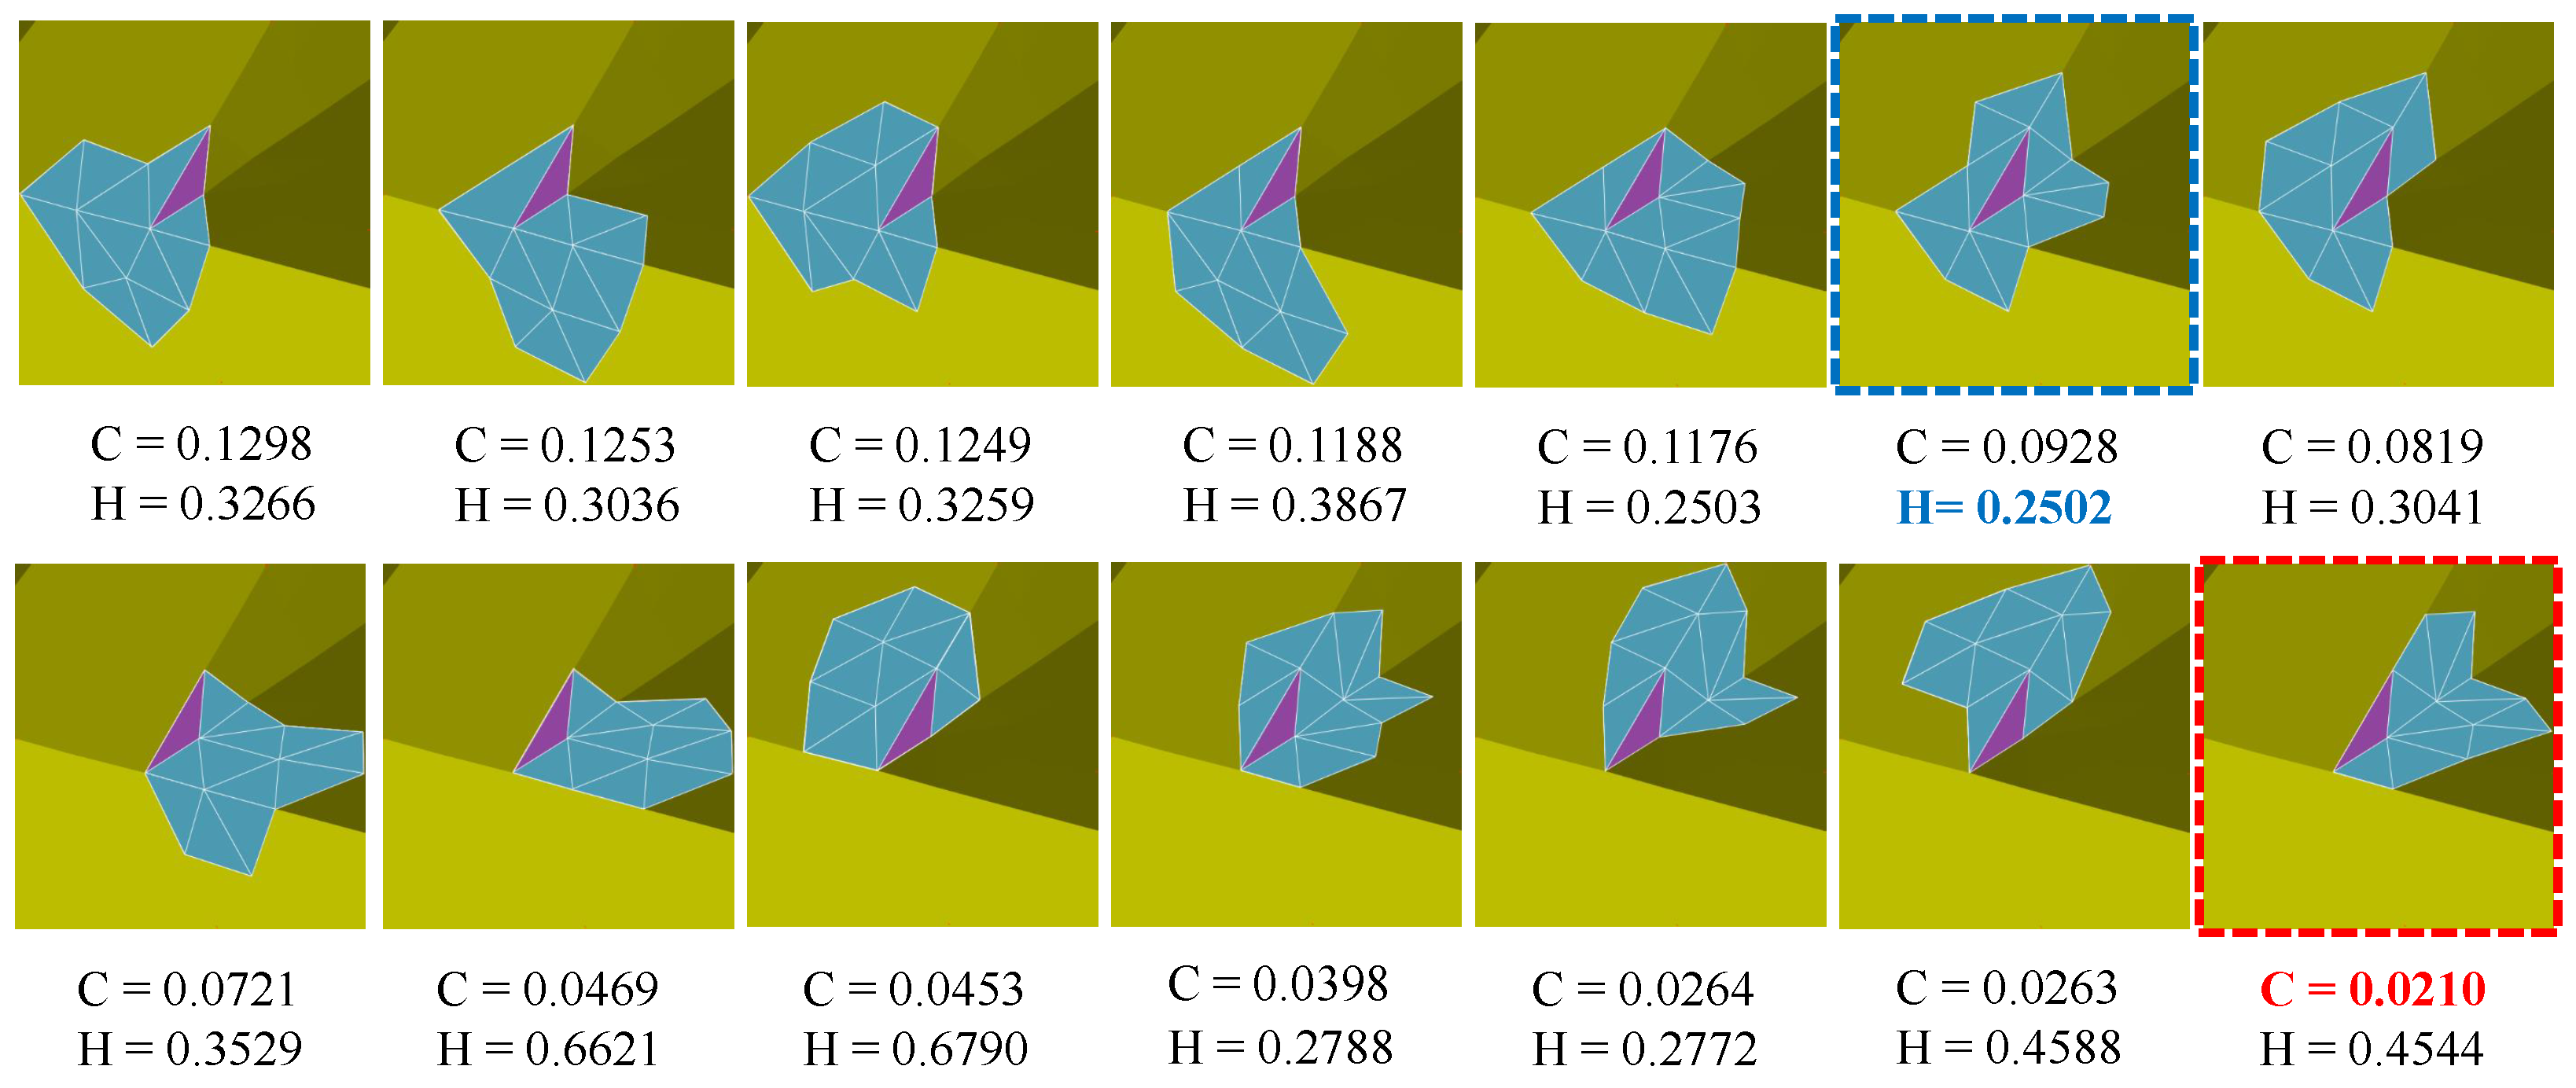 a) The adaptive triangular mesh generated using MATLAB polyshape